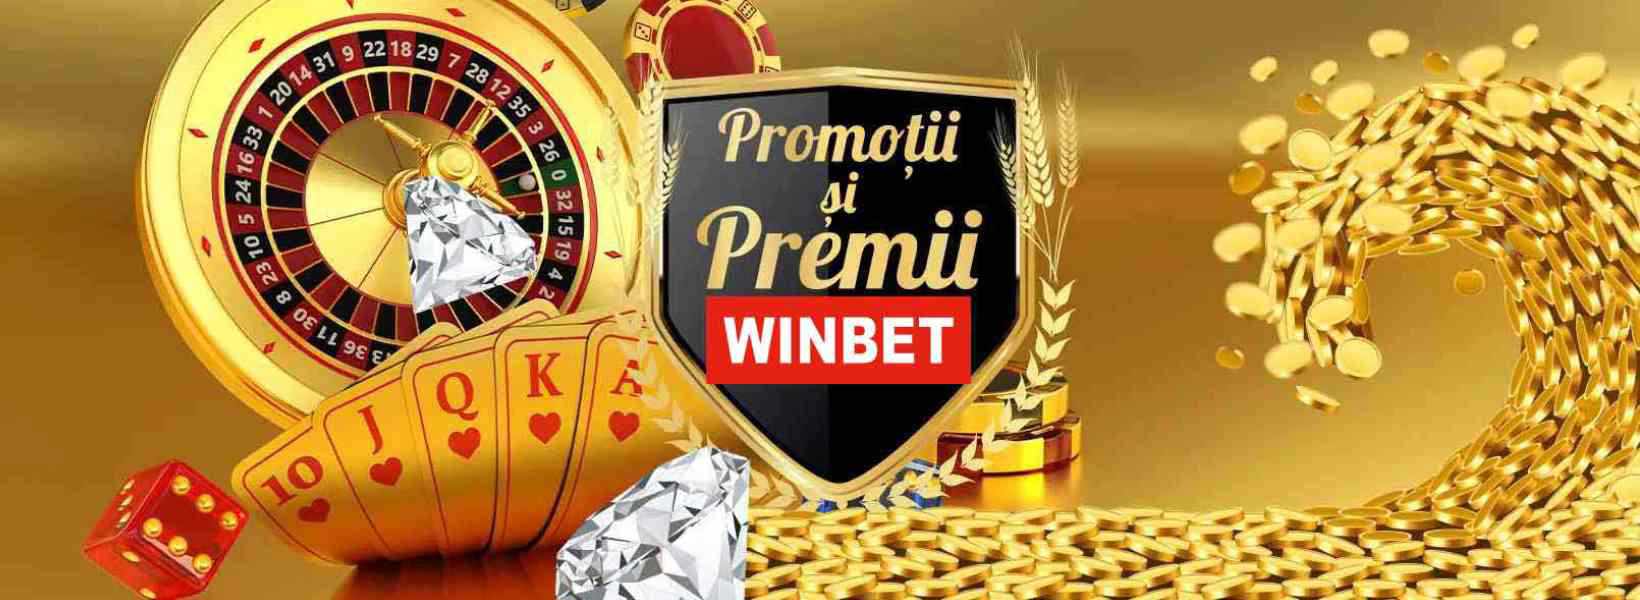 banner winbet promotii cu premii